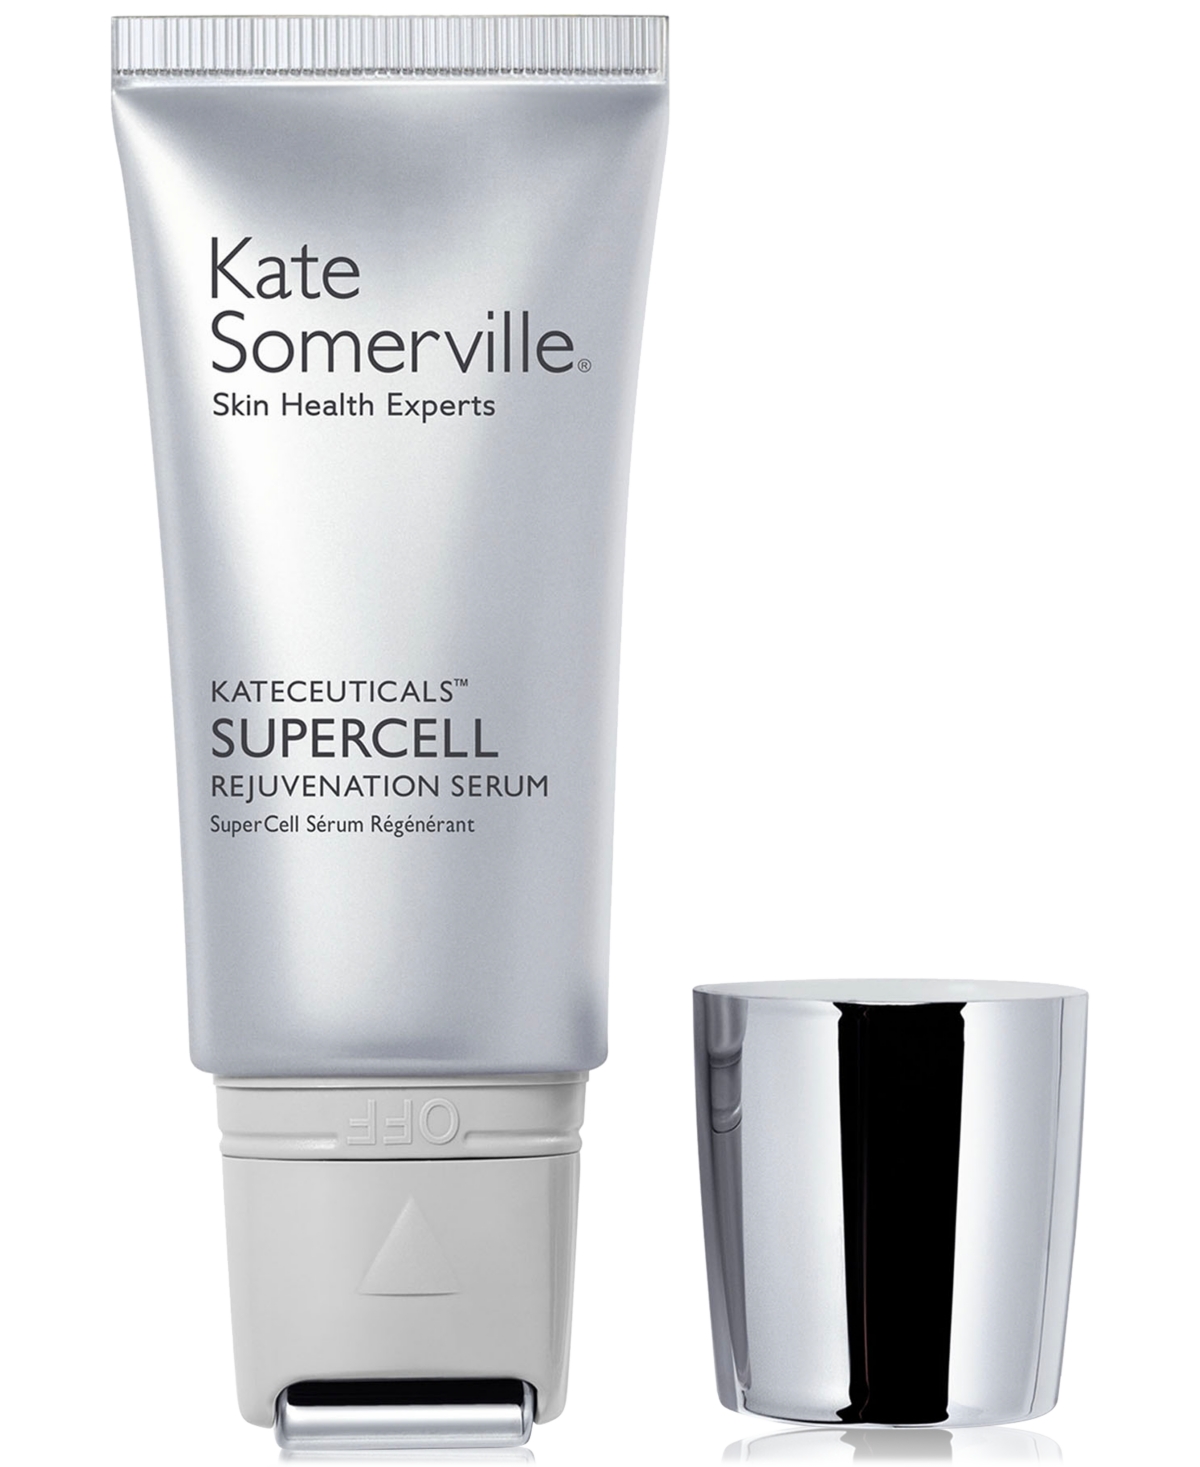 KateCeuticals SuperCell Rejuvenation Serum, 1 oz.